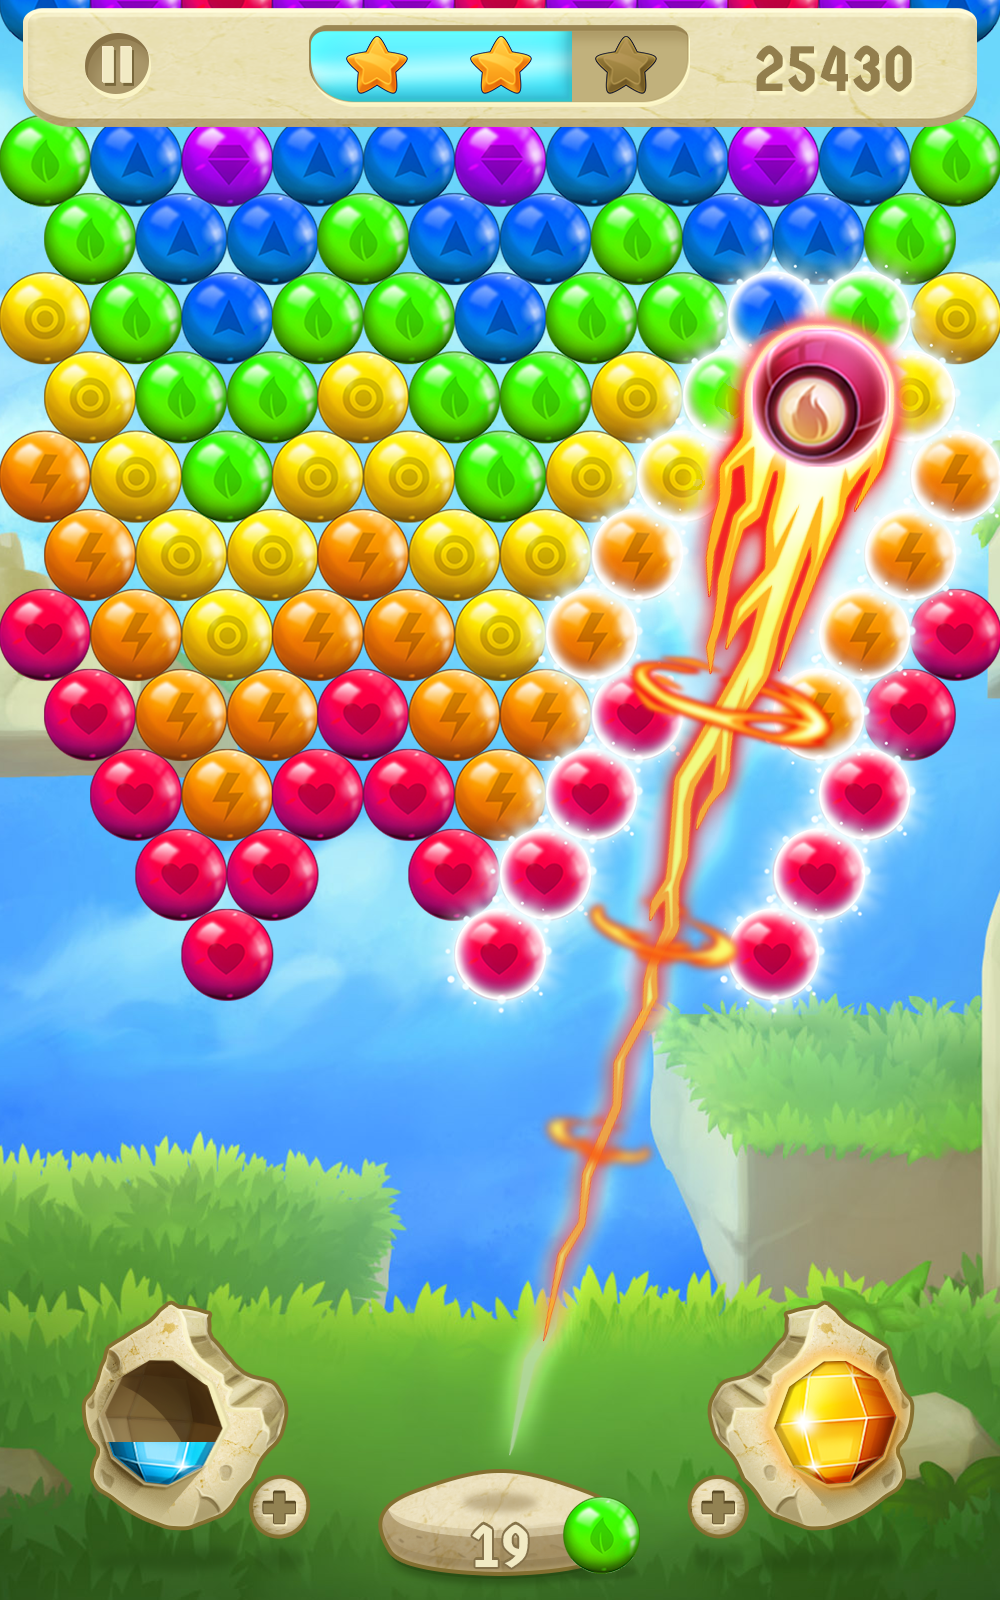 Tower Pop screenshot game